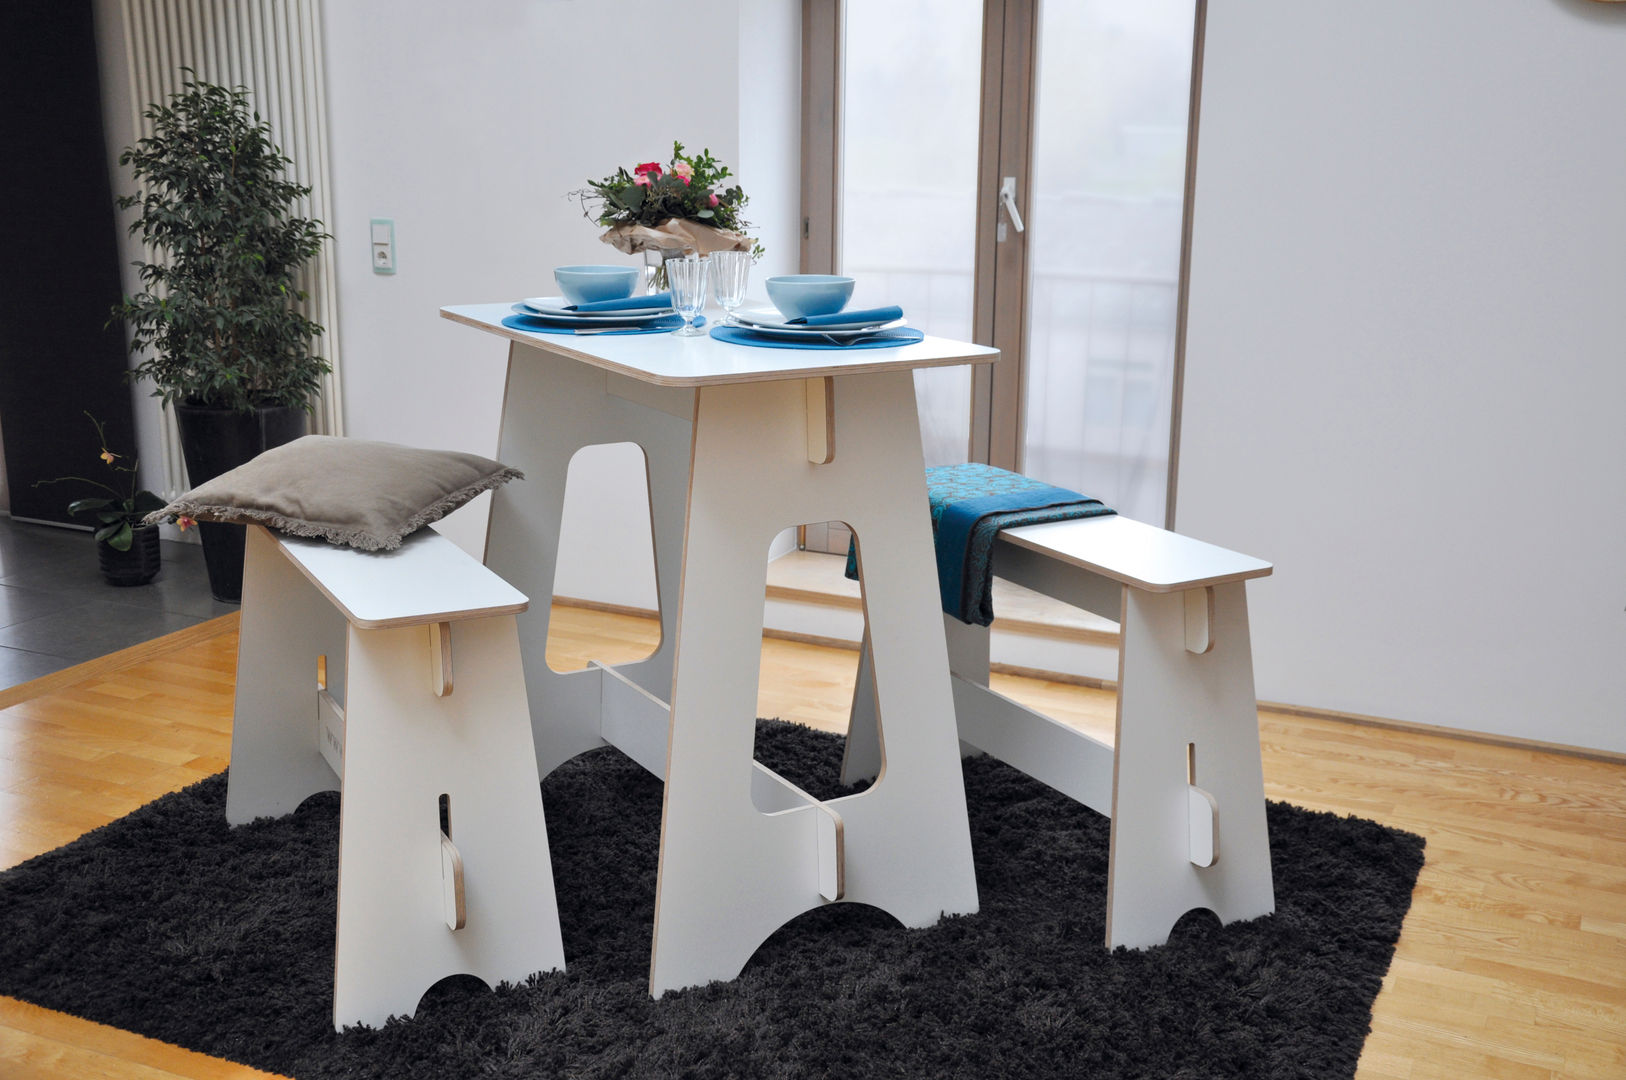 Steckmöbel Event-Tisch, das wunschmöbel das wunschmöbel Comedores de estilo moderno Mesas